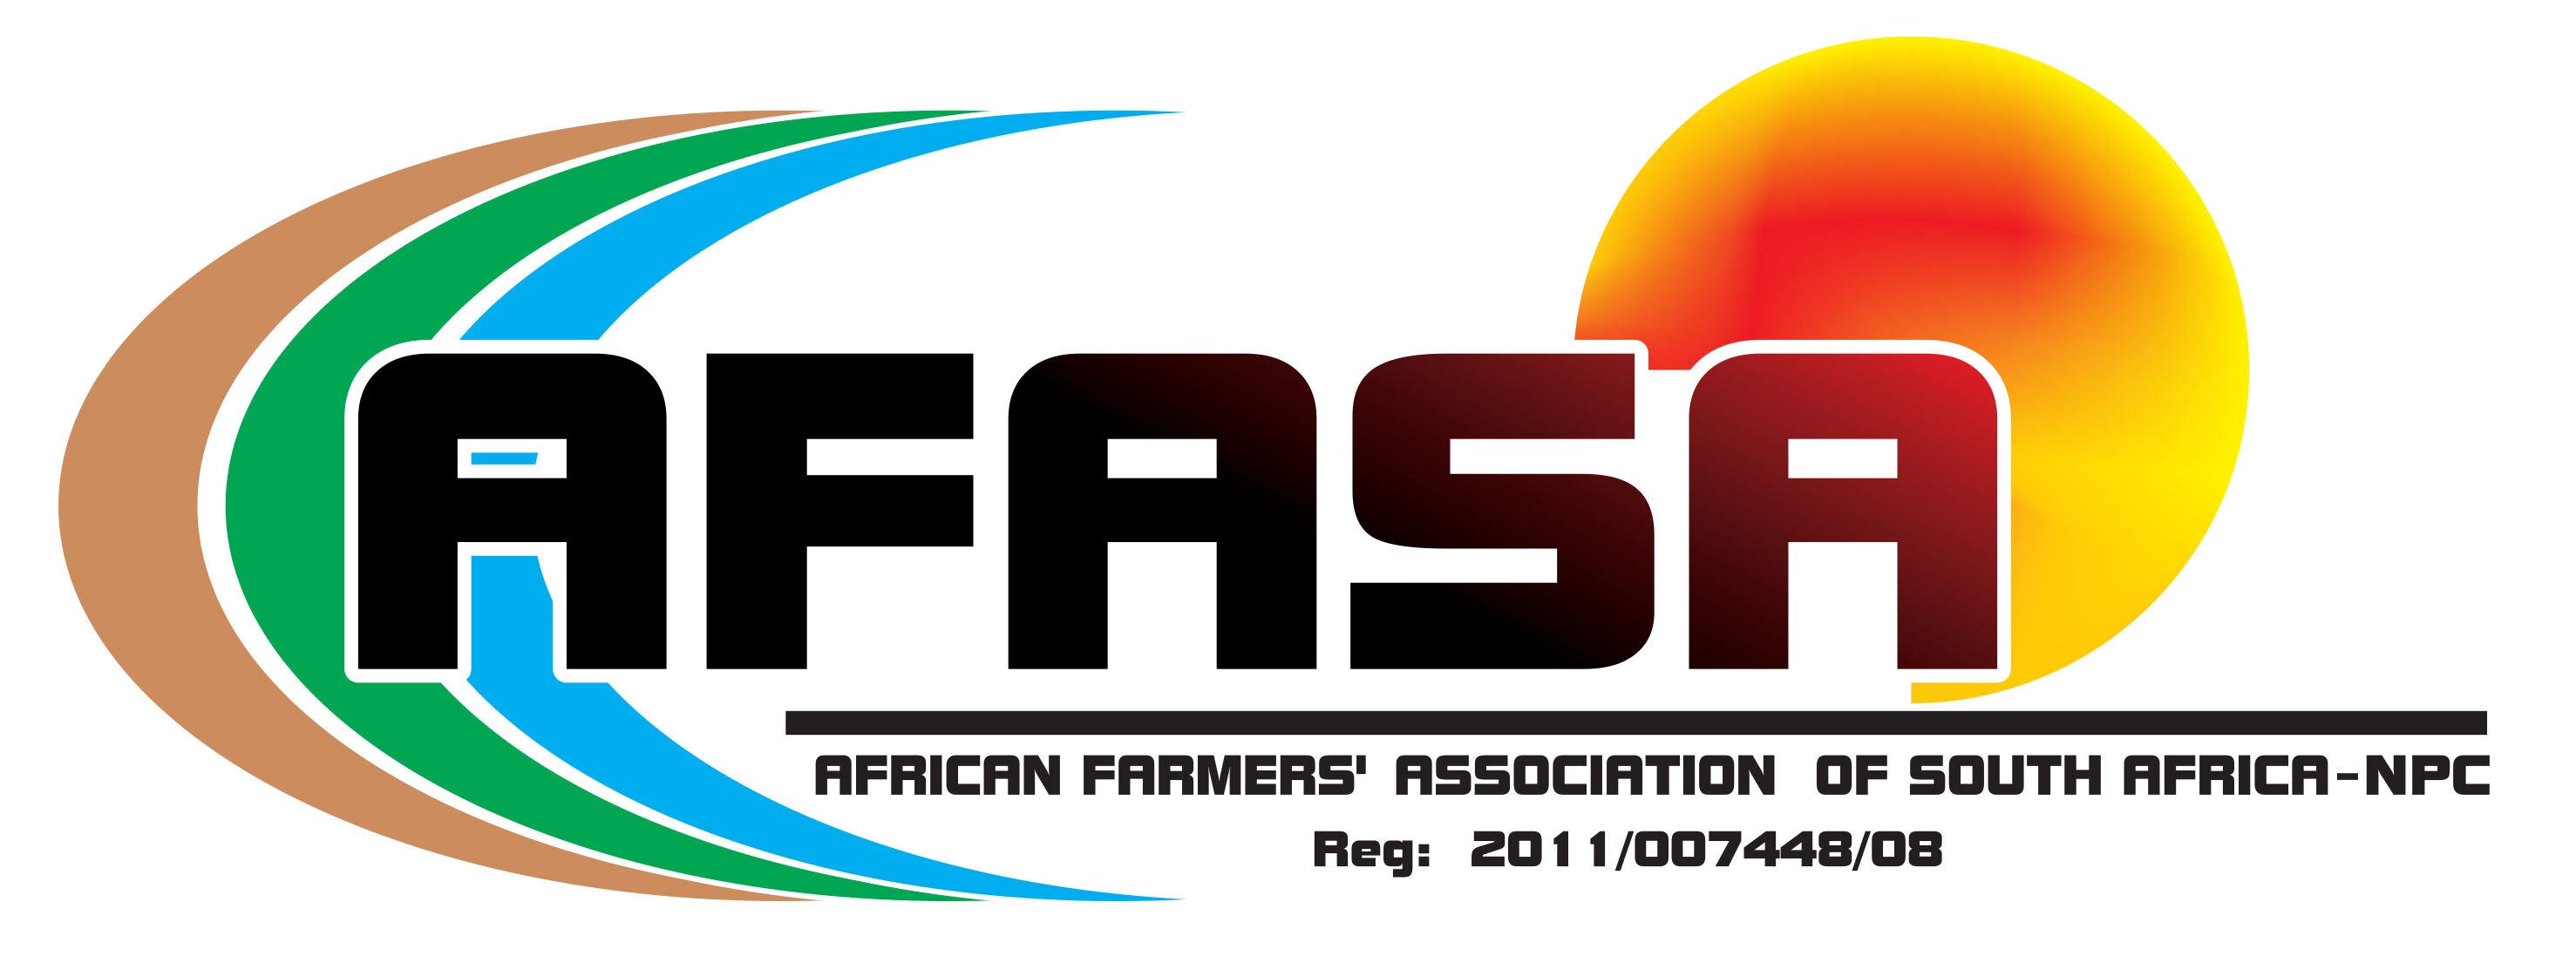 AFASA_Farmer